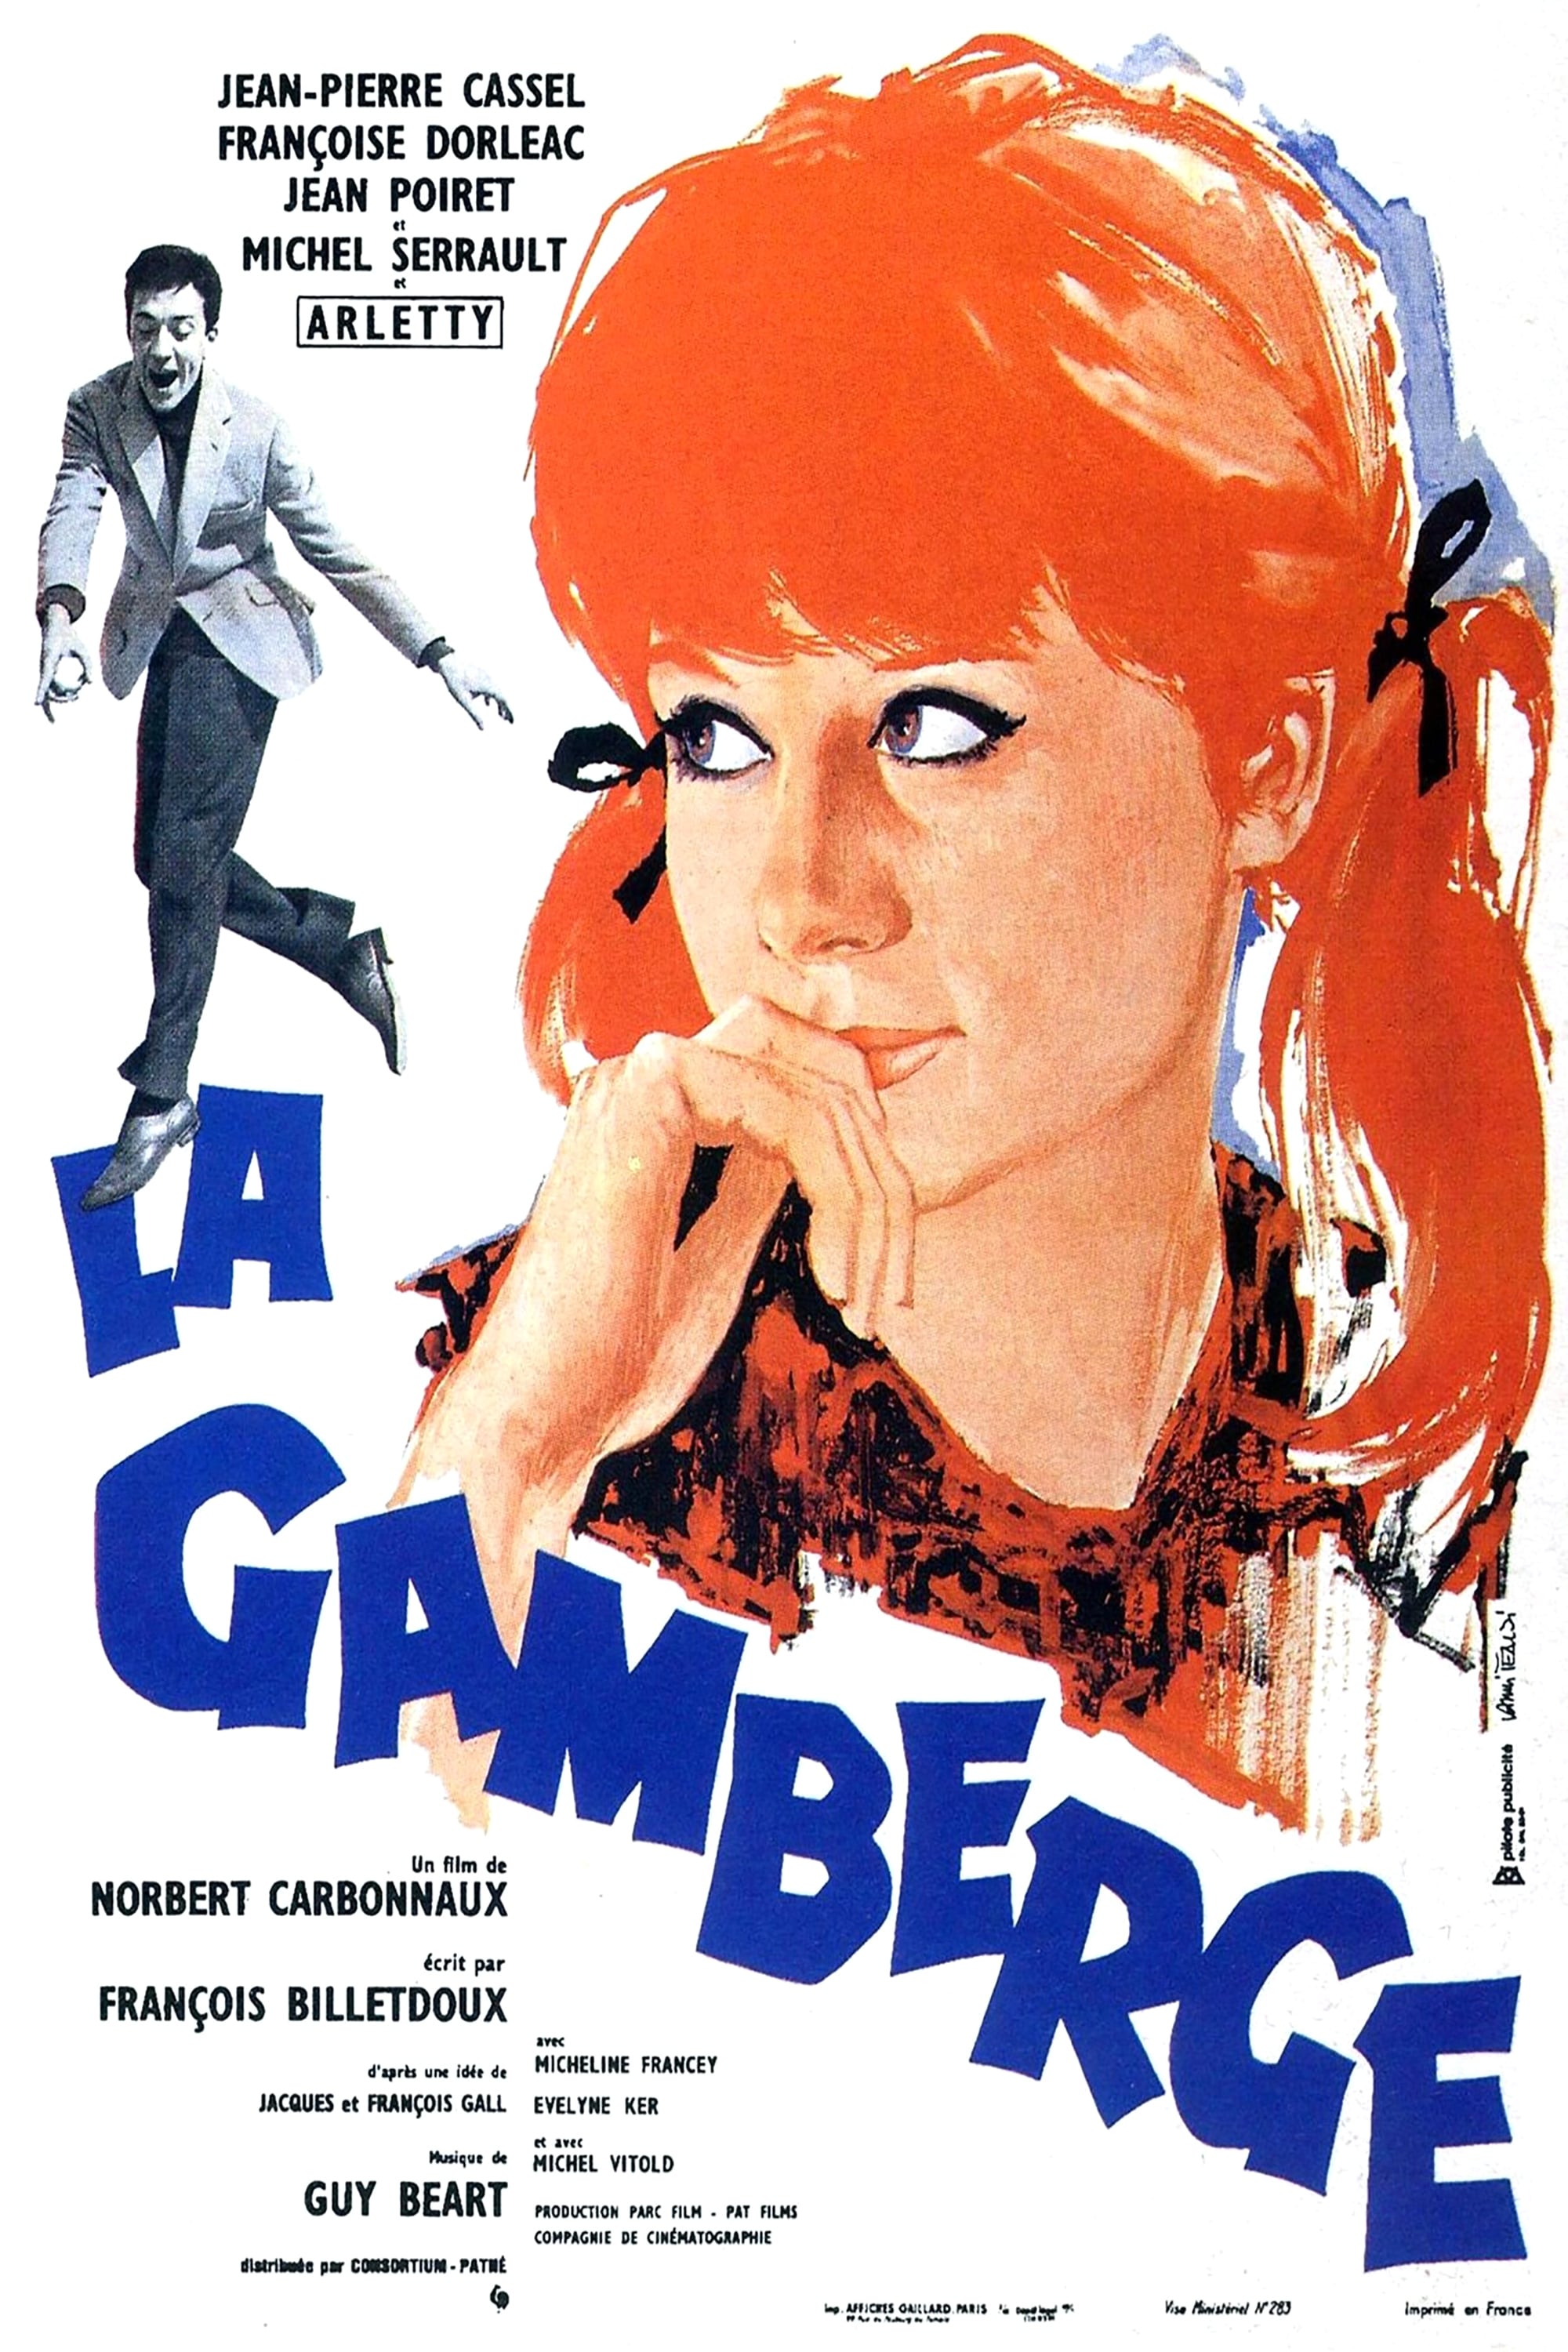 La Gamberge (1962)